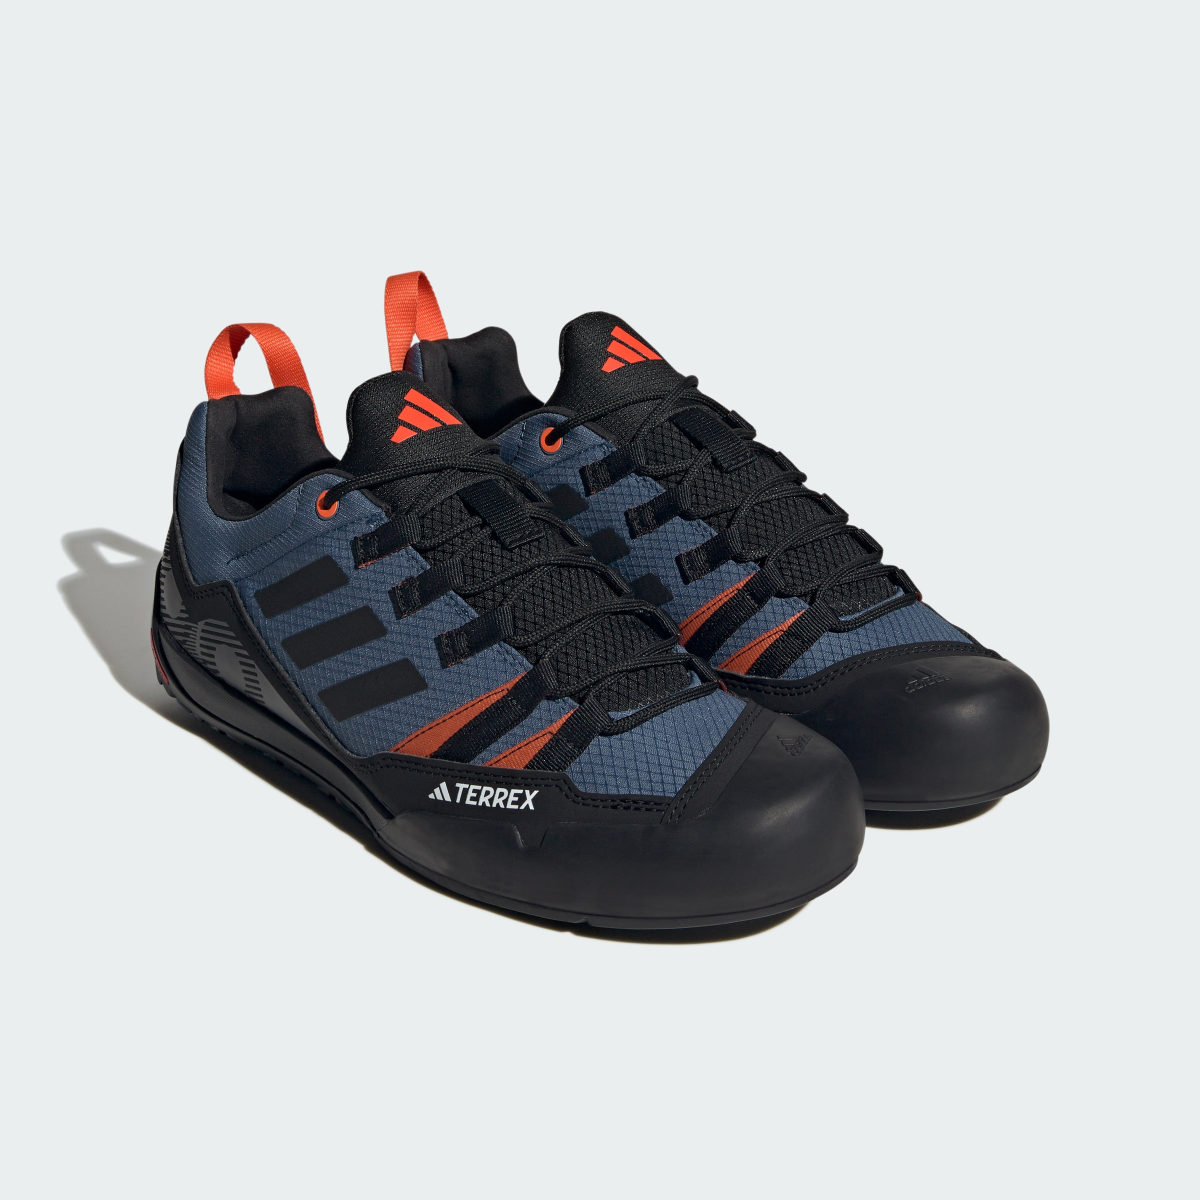 Adidas Terrex Swift Solo 2.0 Hiking Shoes. 5